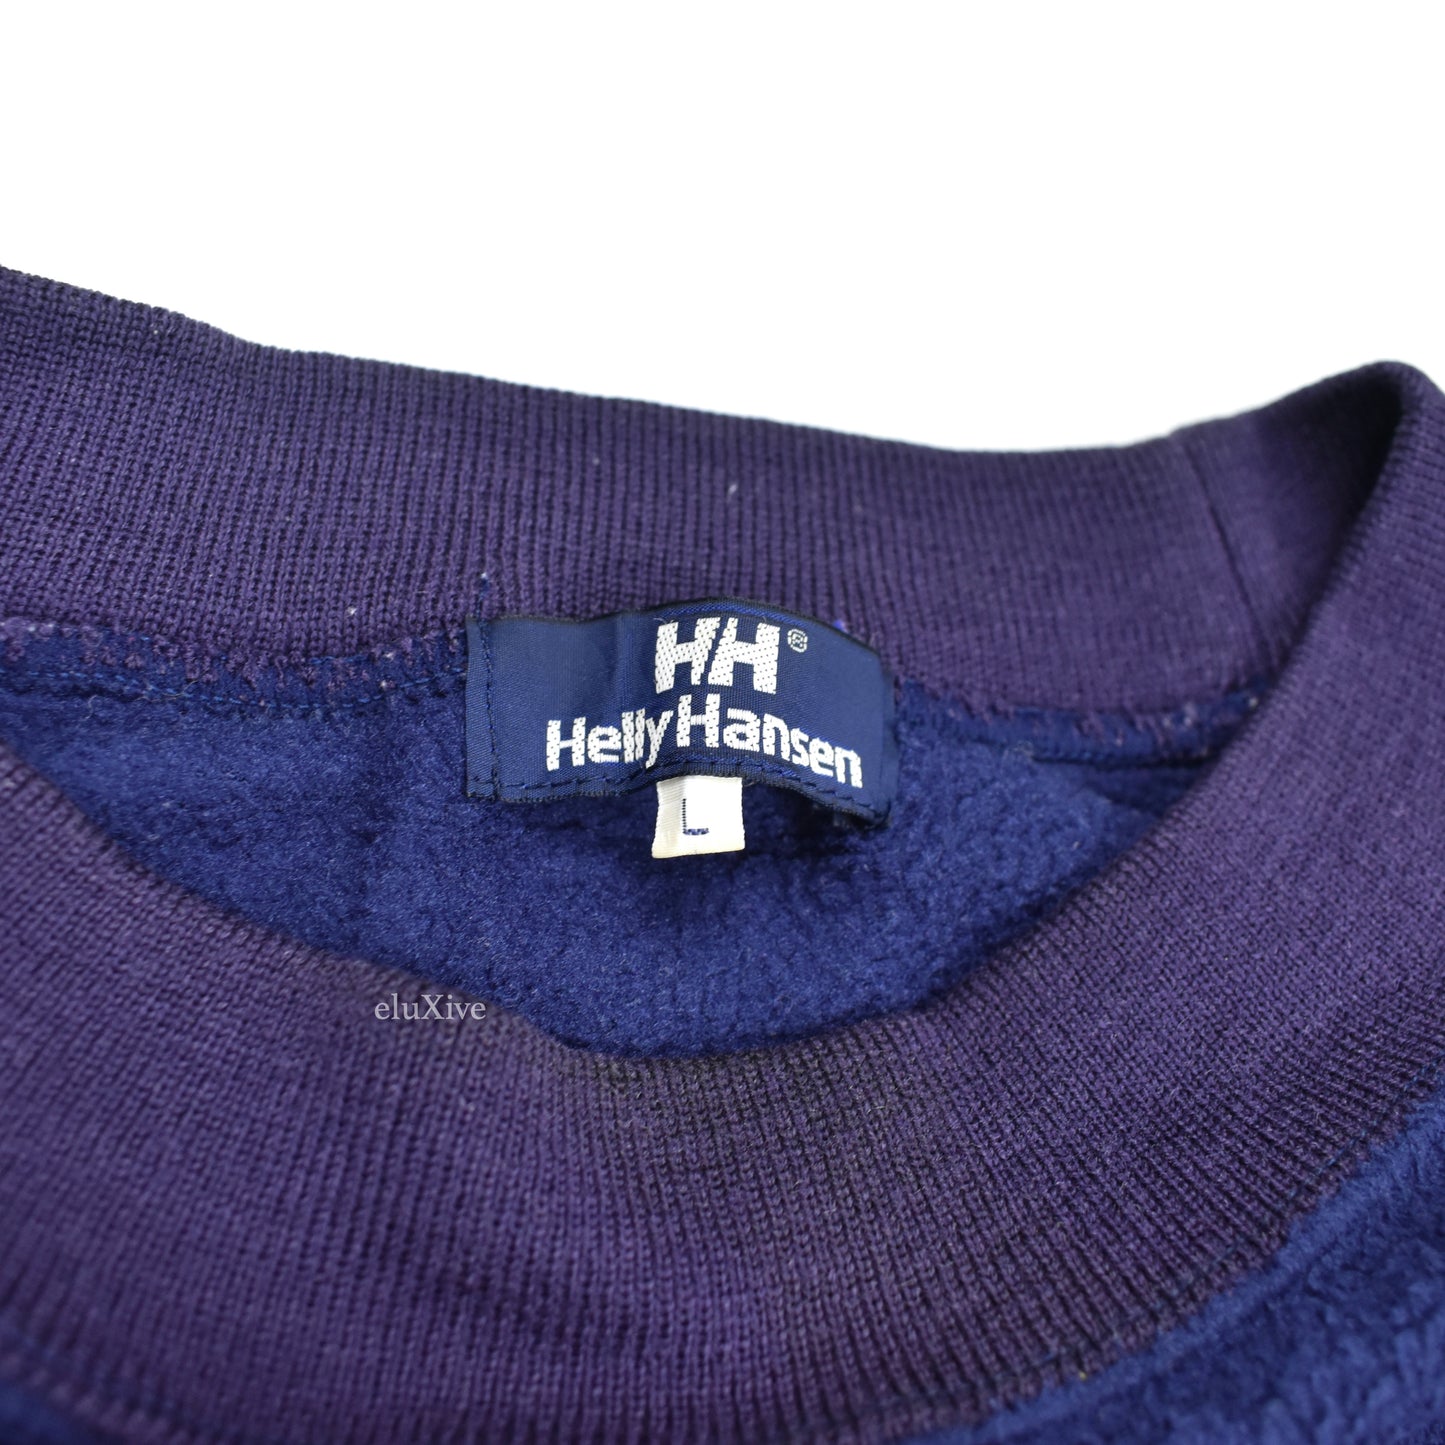 Helly Hansen - Vintage Navy Logo Embroidered Fleece Sweatshirt